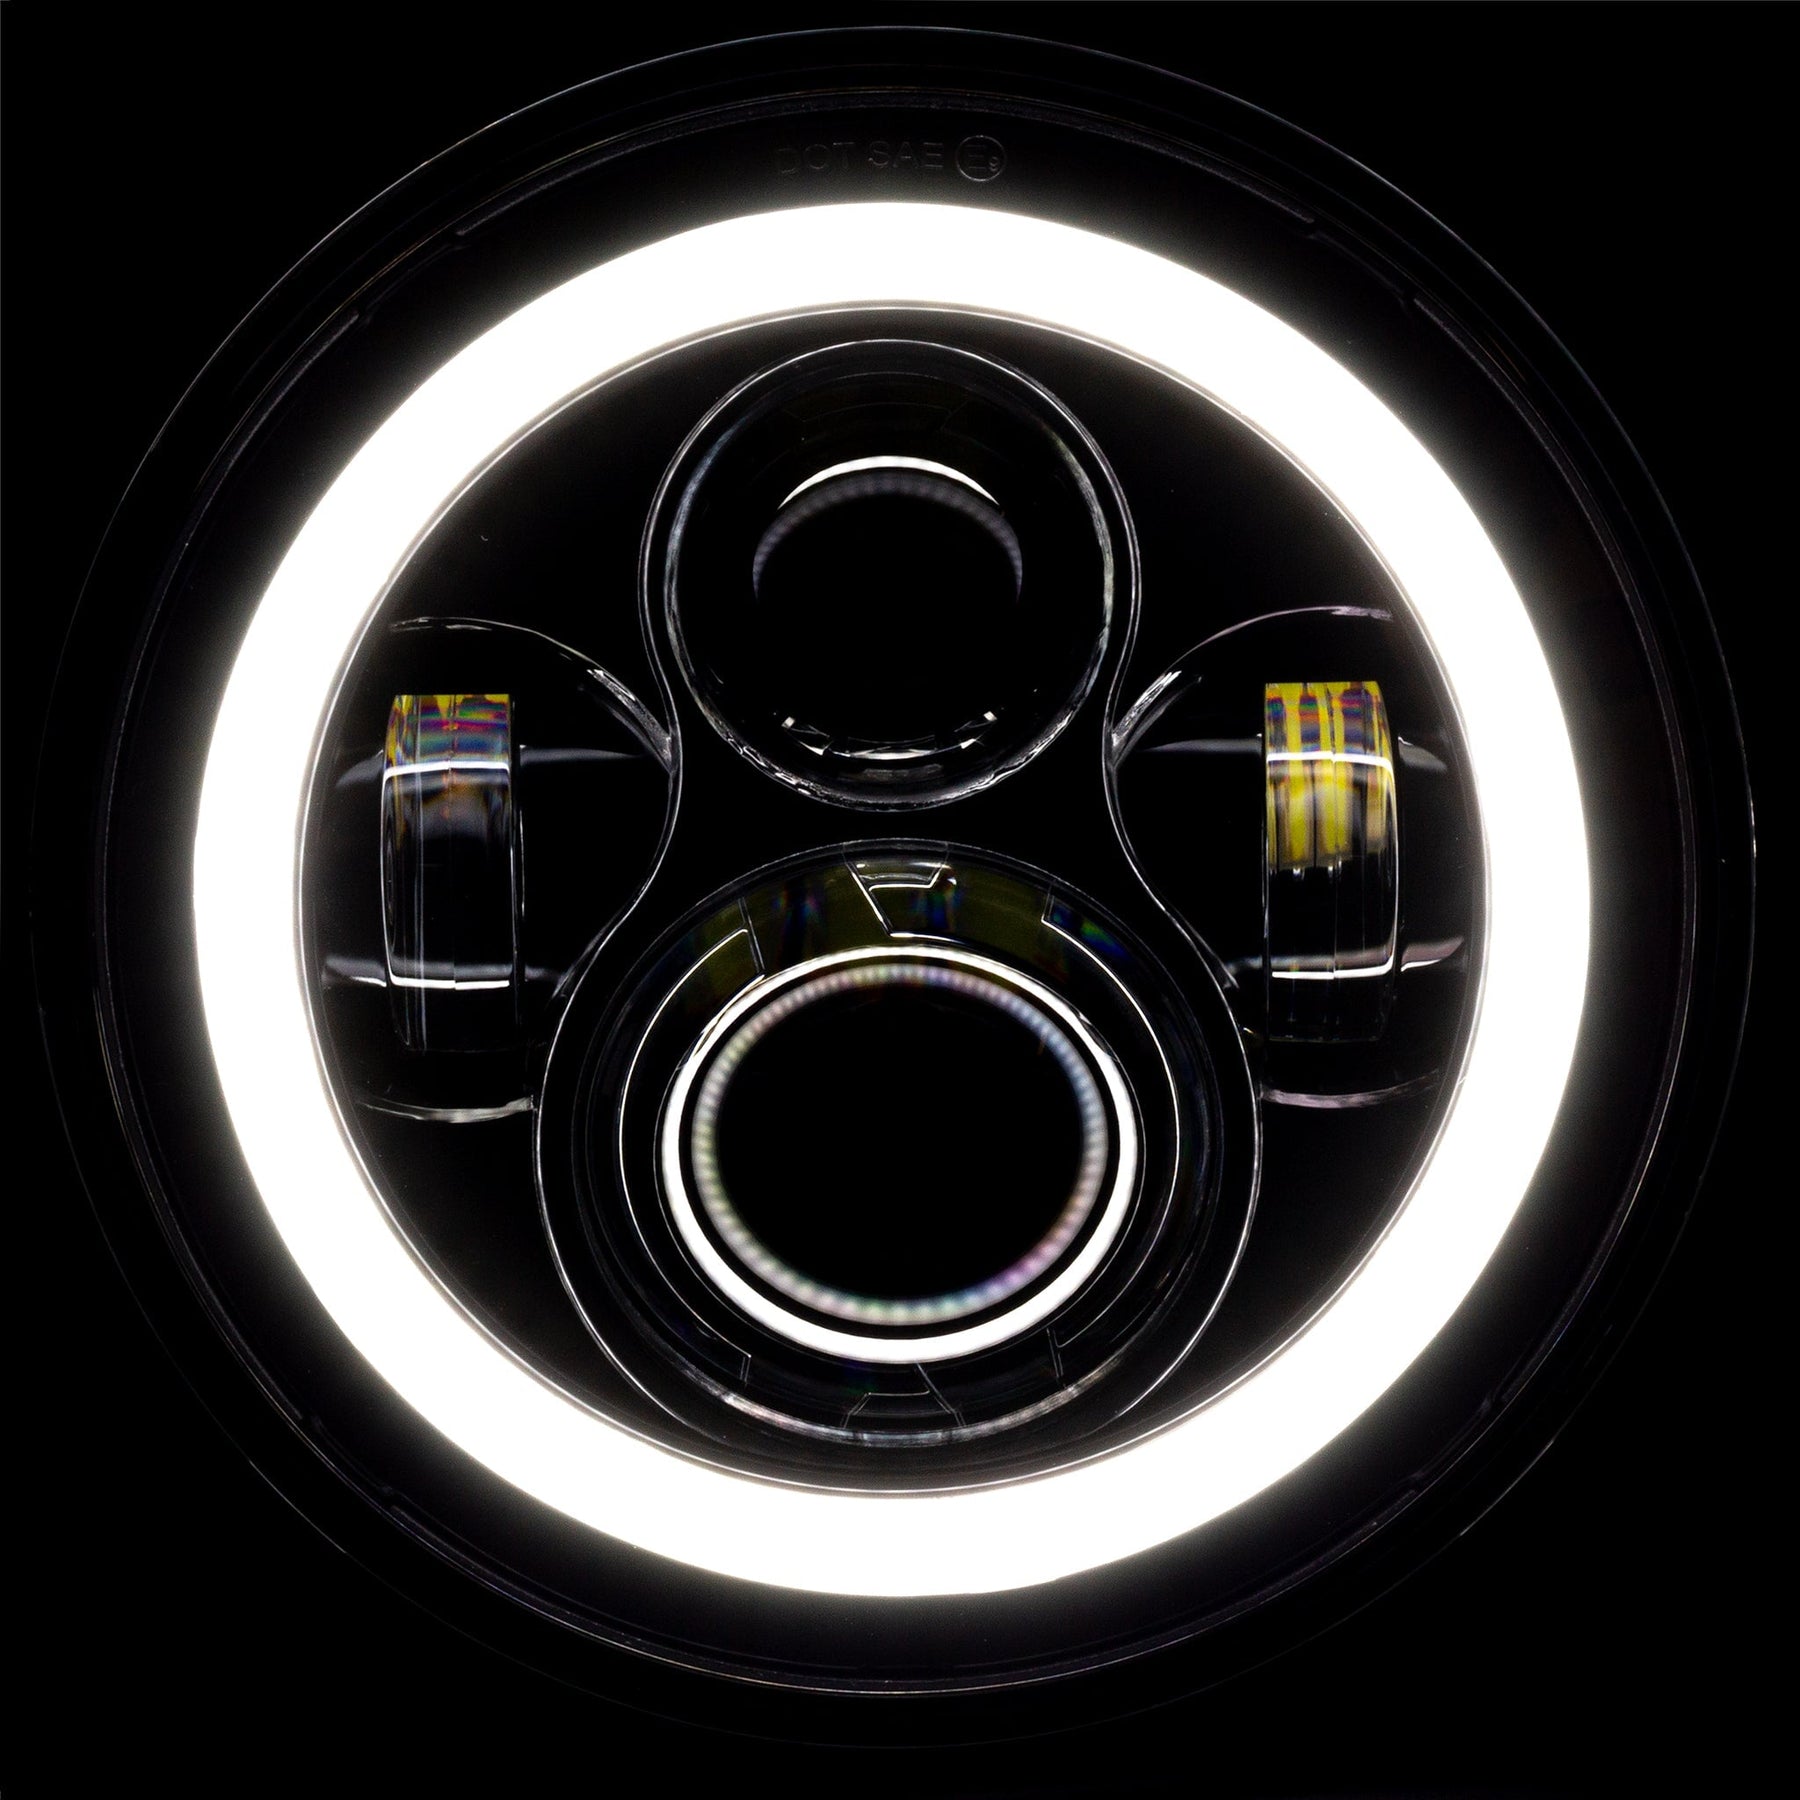 Eagle Lights 7" LED Headlight with LED Halo Ring for Harley Davidson and Indian Motorcycles - Generation I / Black Kit